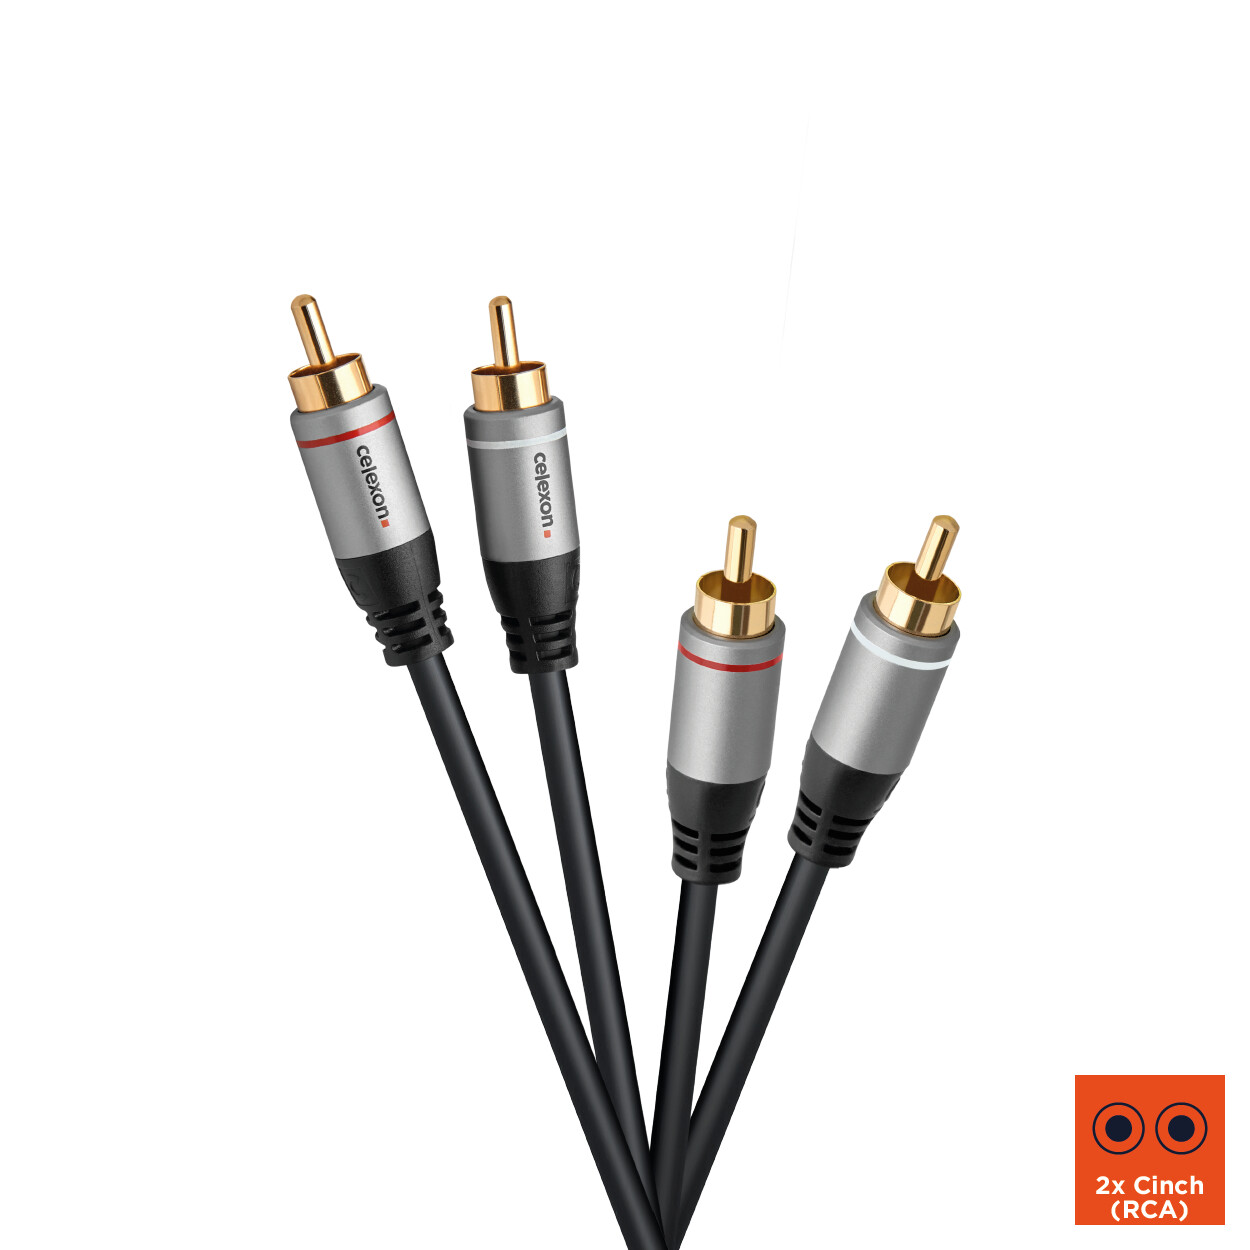 celexon-2x-Cinch-Stereo-Audiokabel-7-5m-Professional-Line